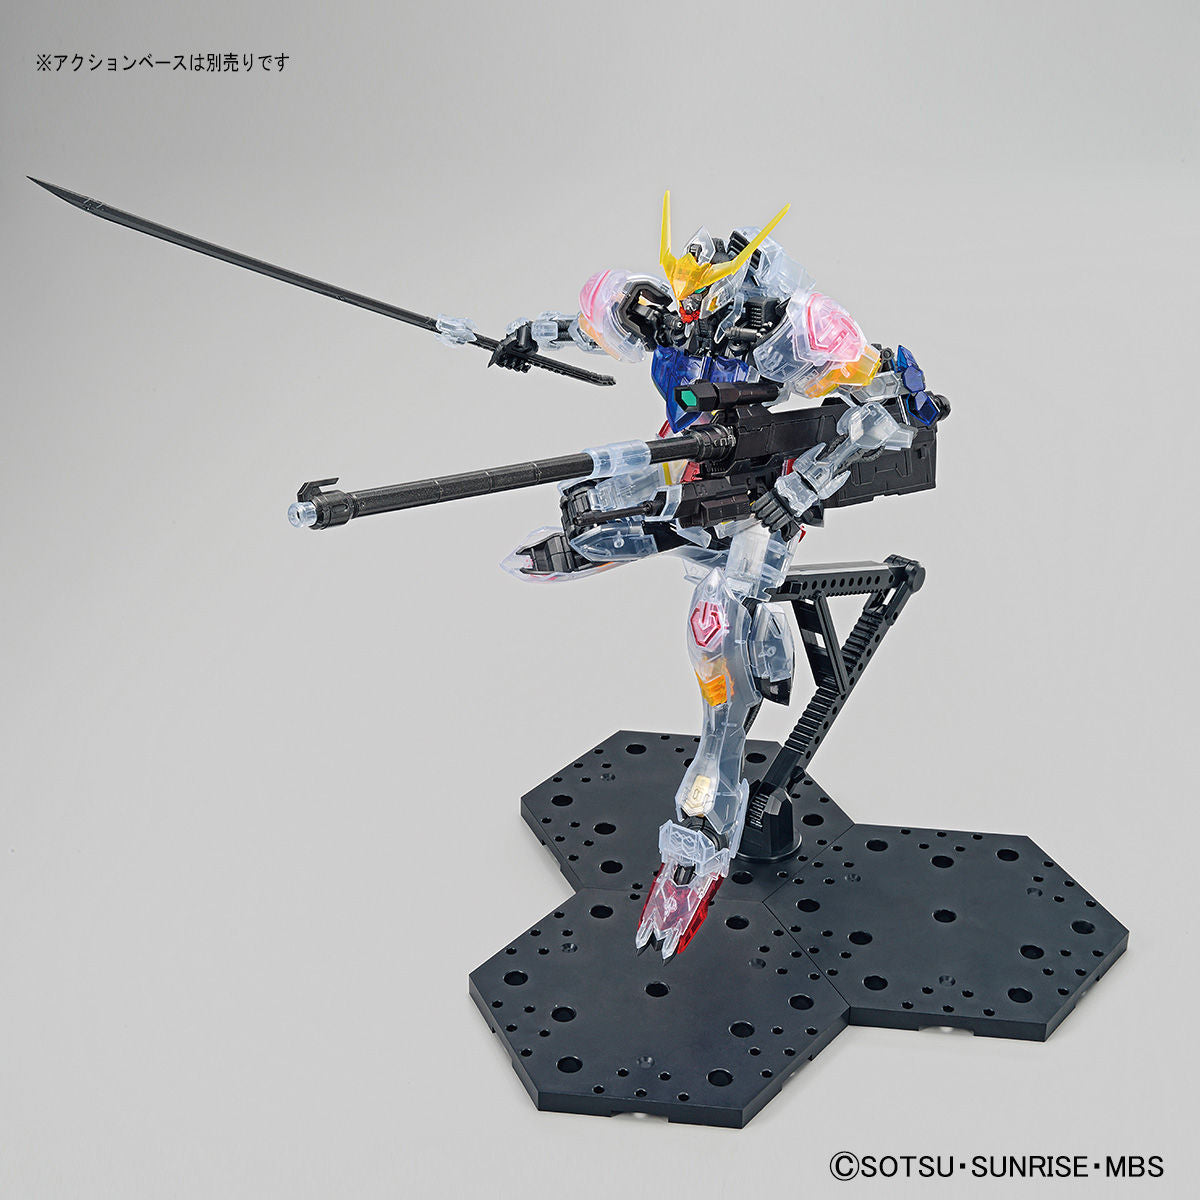 MG 1/100 Gundam Base Limited Gundam Barbatos [Clear Color]